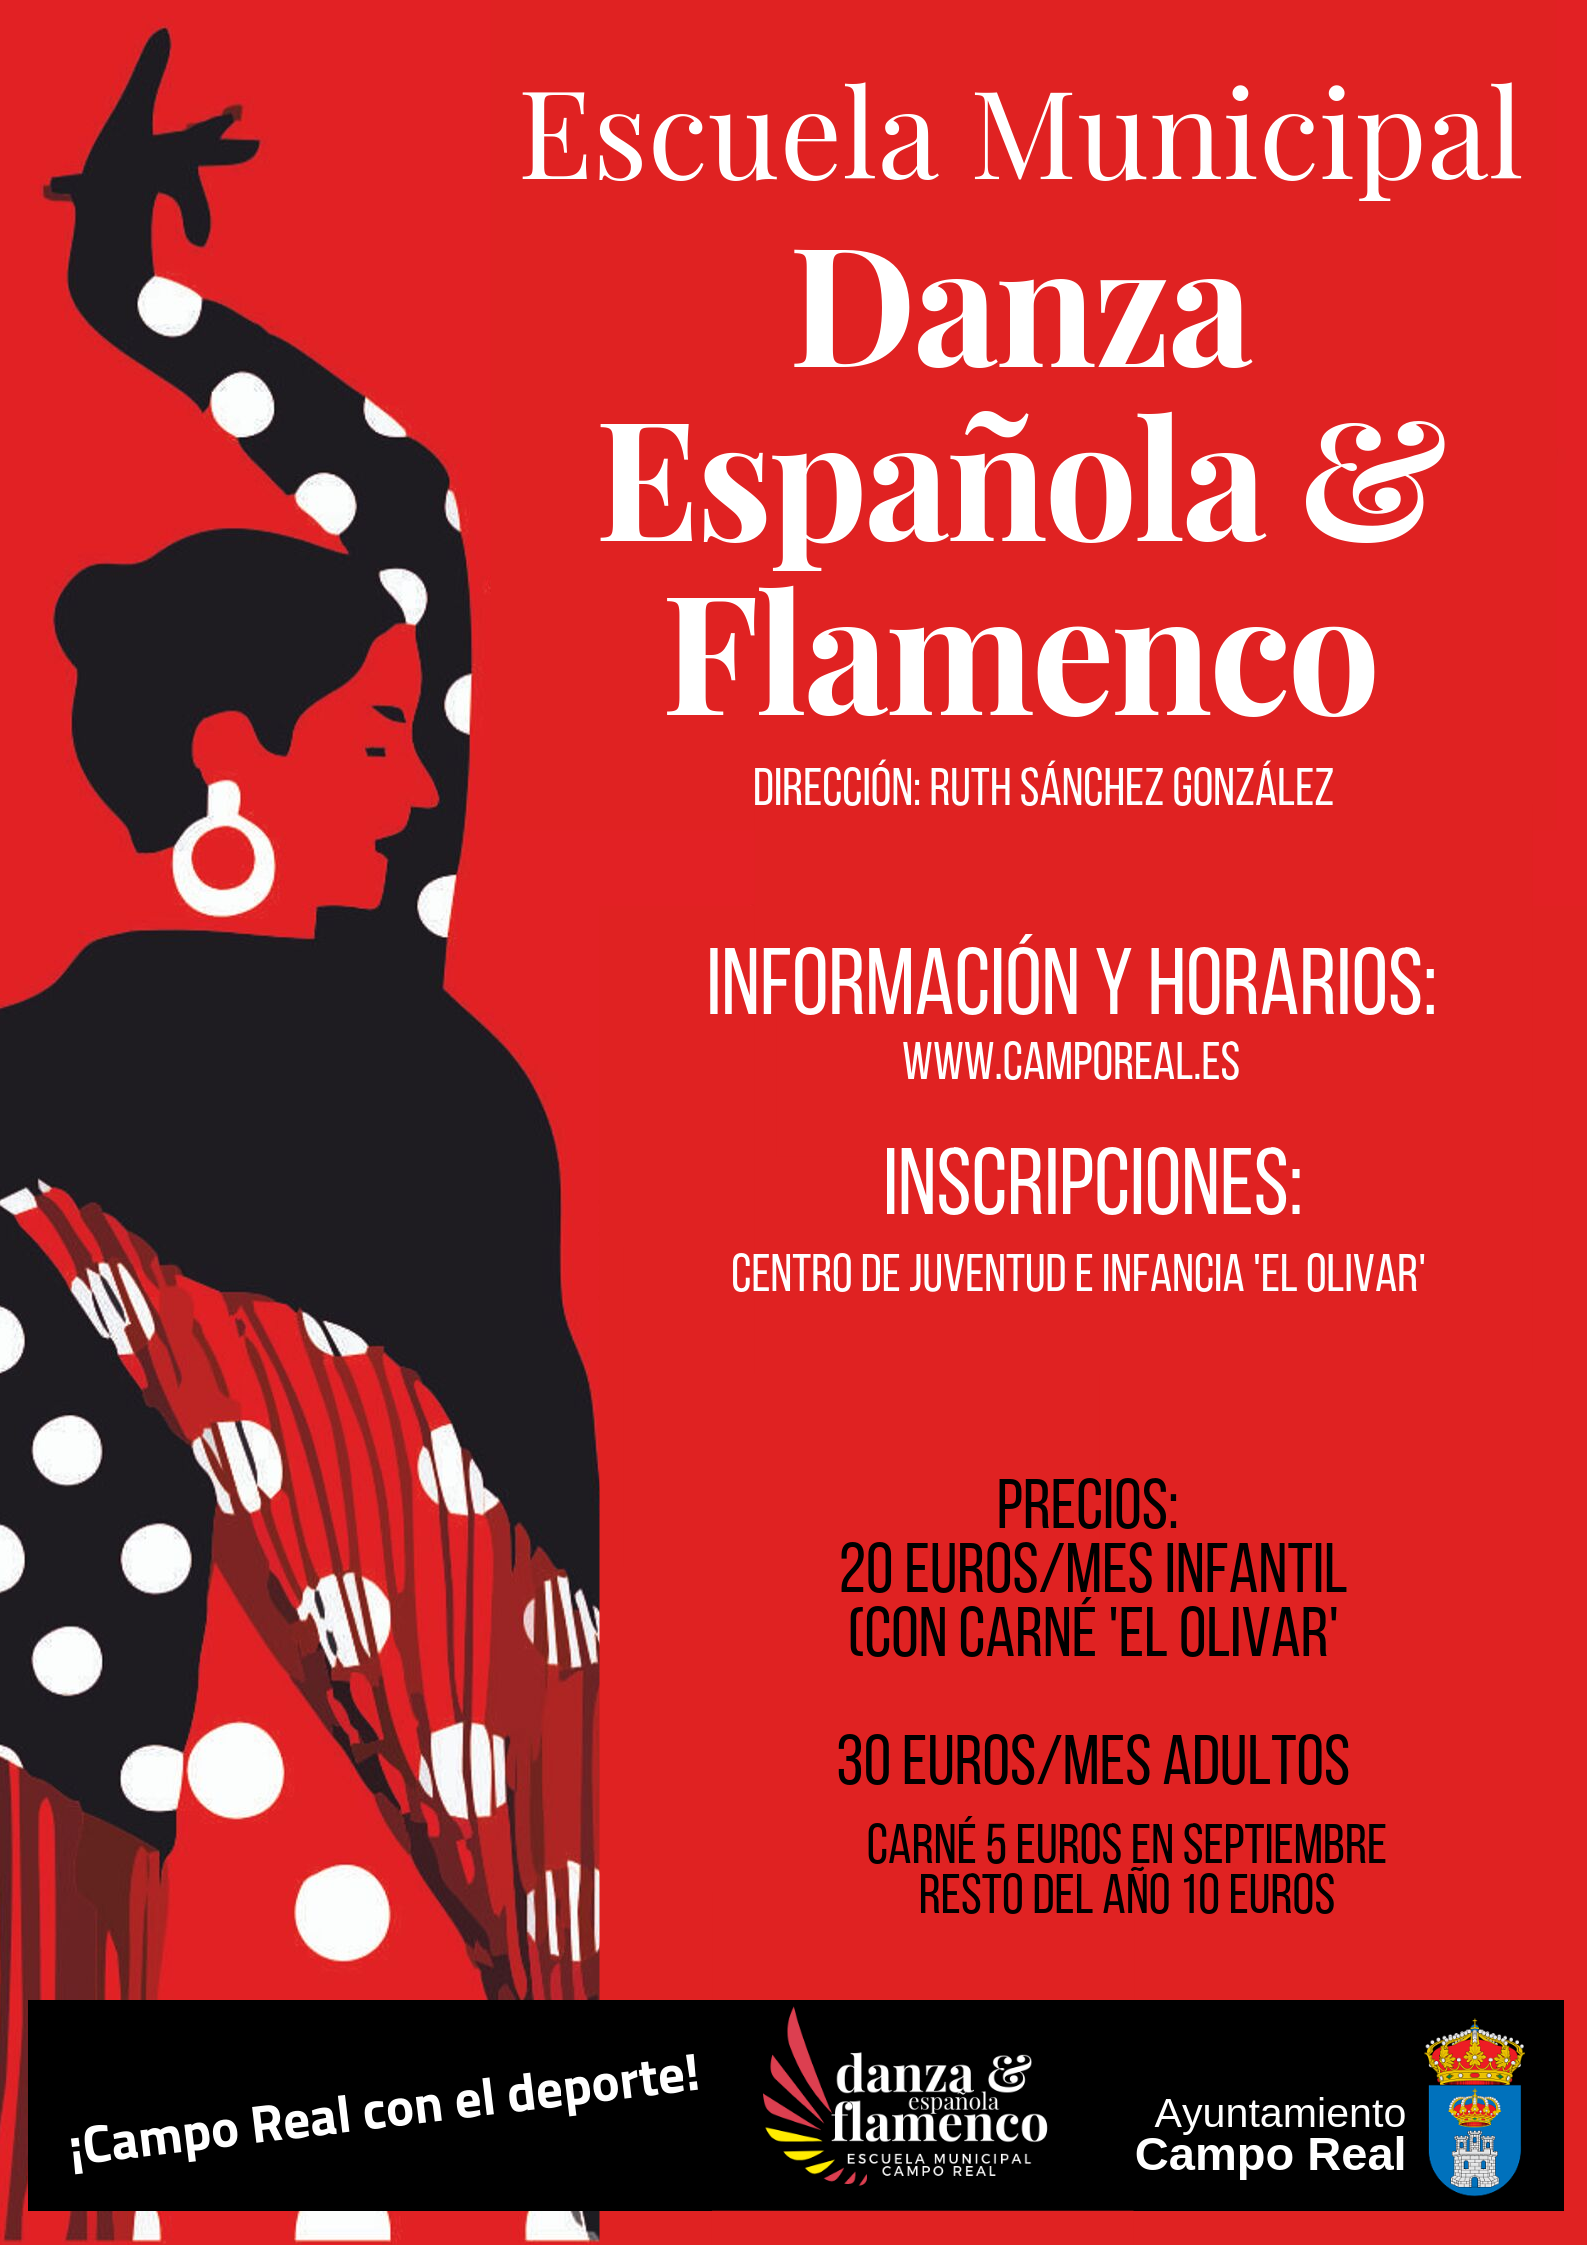 flamenco_cr19_precios.png - 975.69 kB